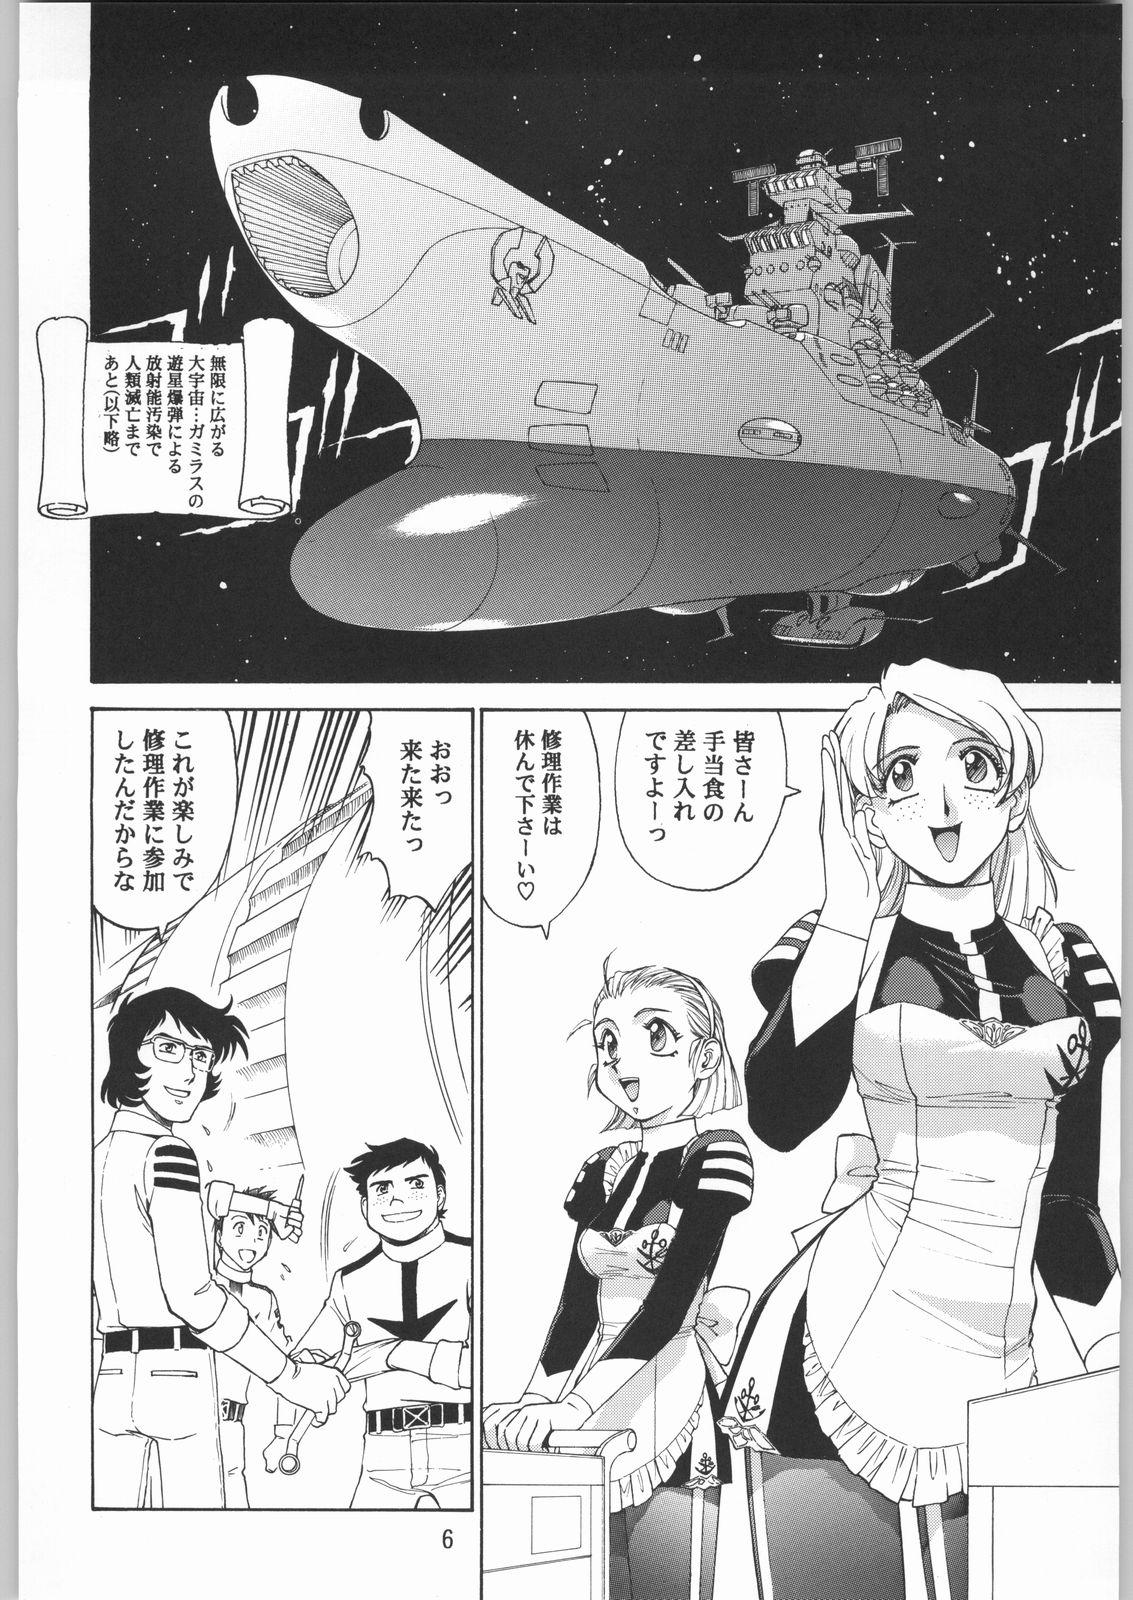 Safadinha Megaton Punch 1 - Space battleship yamato Chobits Pareja - Page 5